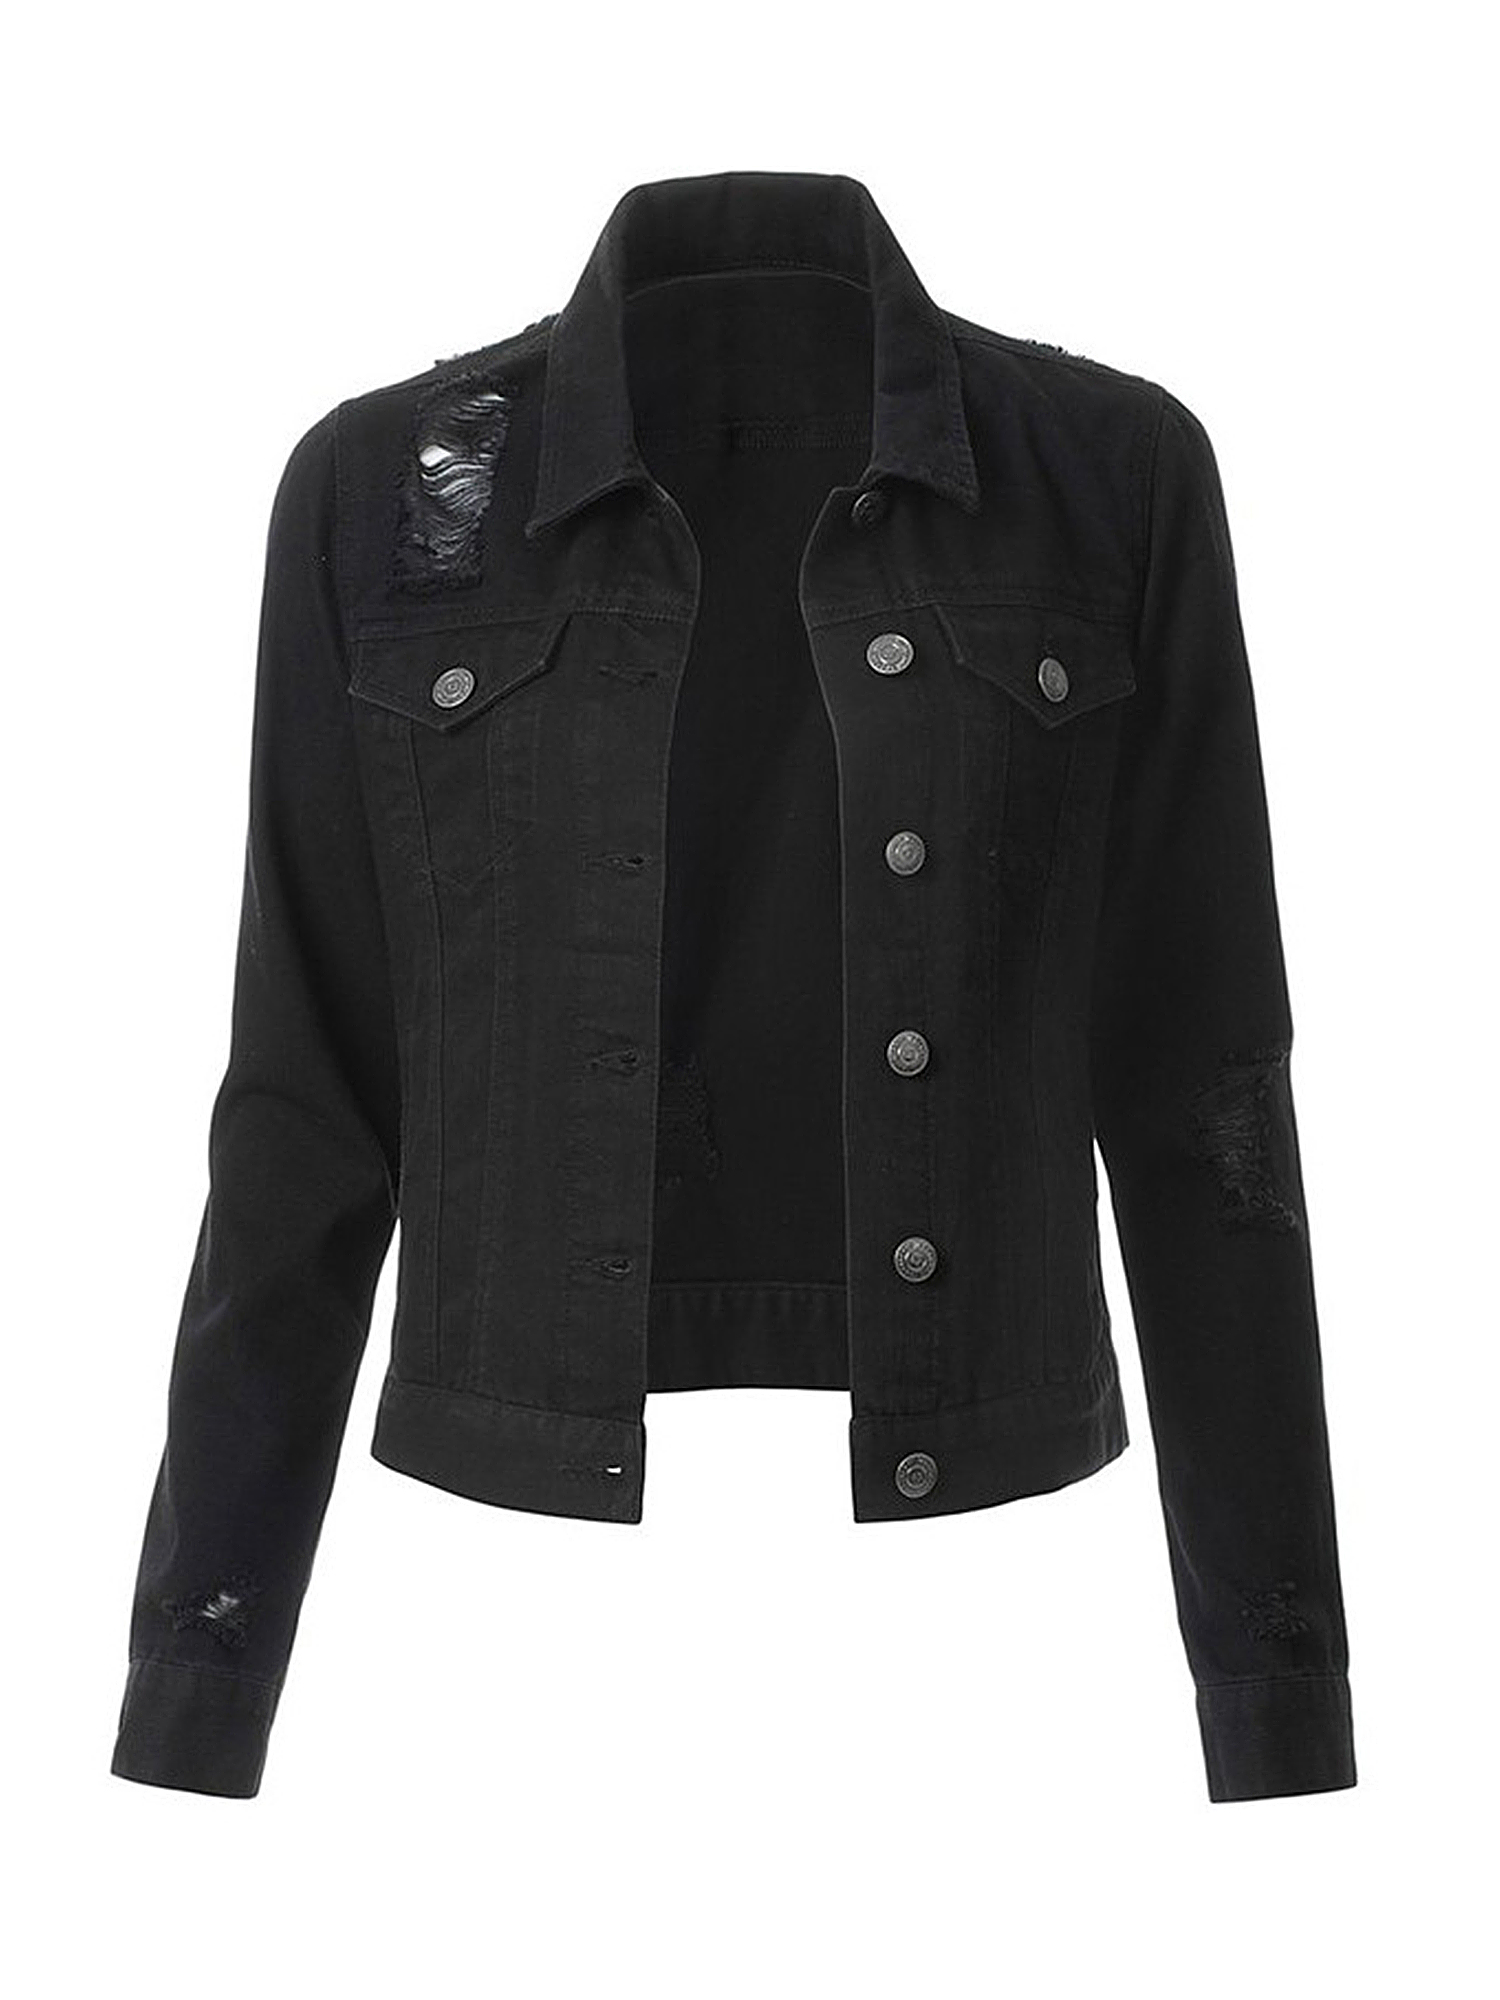 Jean Jacket for Women Distressed Ripped Long Sleeve Oversized Denim Jackets